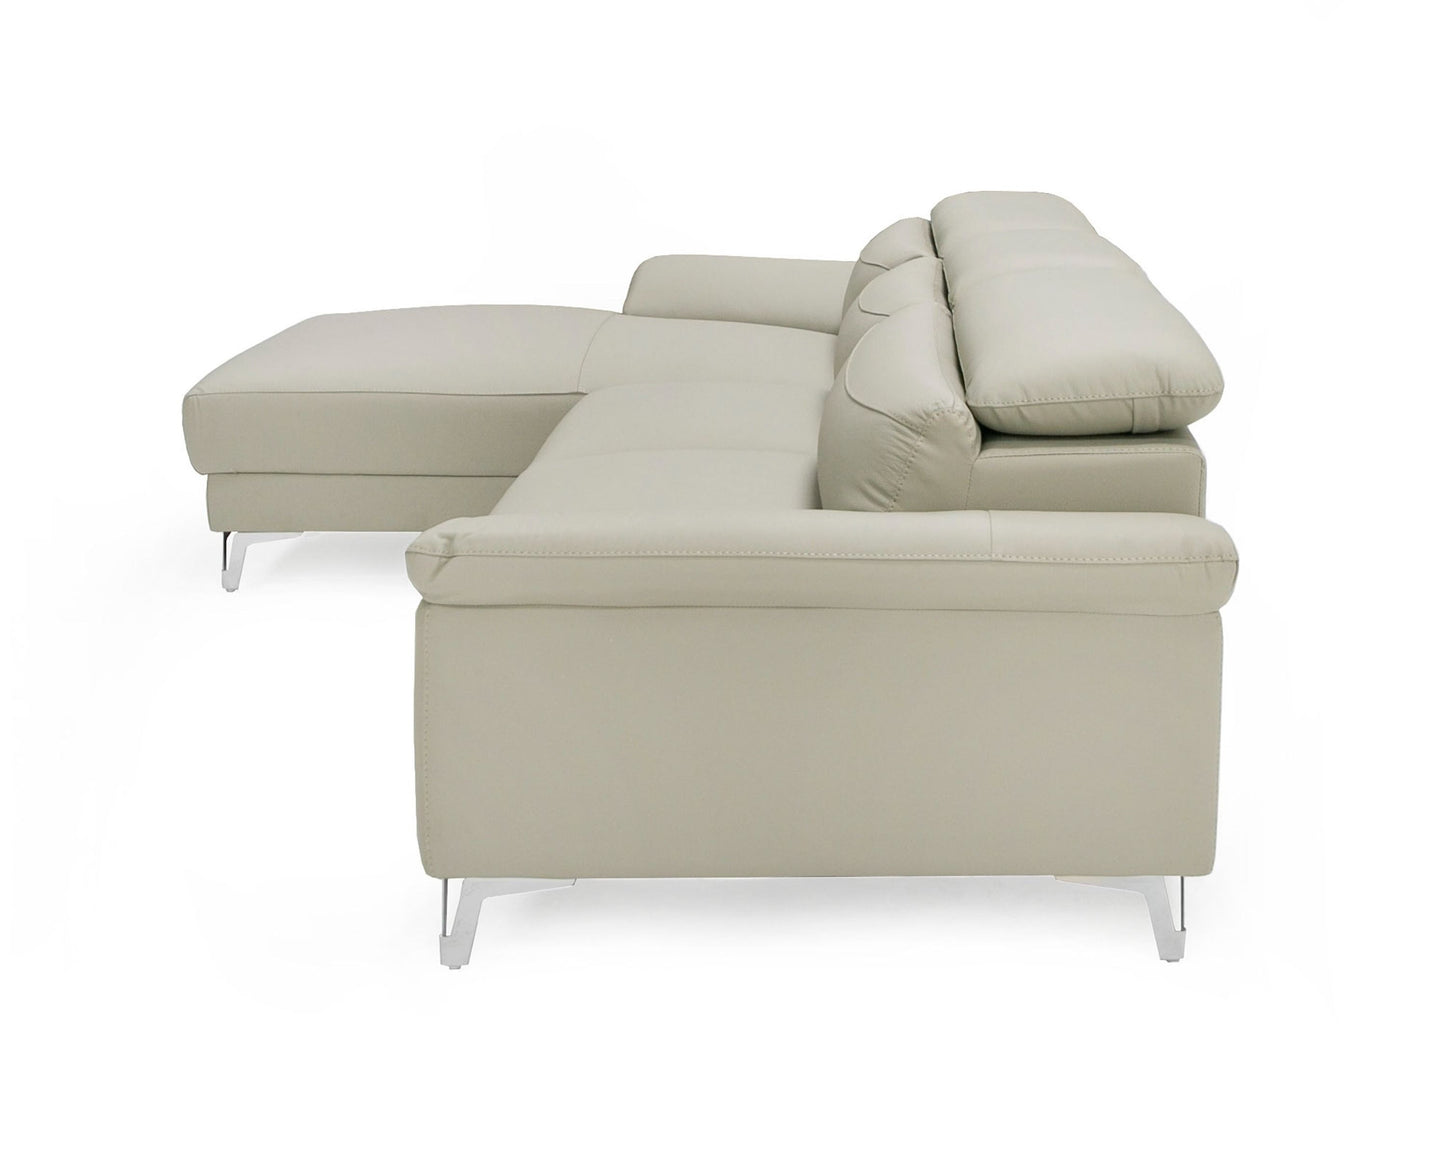 Divani Casa Sura - Modern Light Grey Leather Left Facing Sectional Sofa